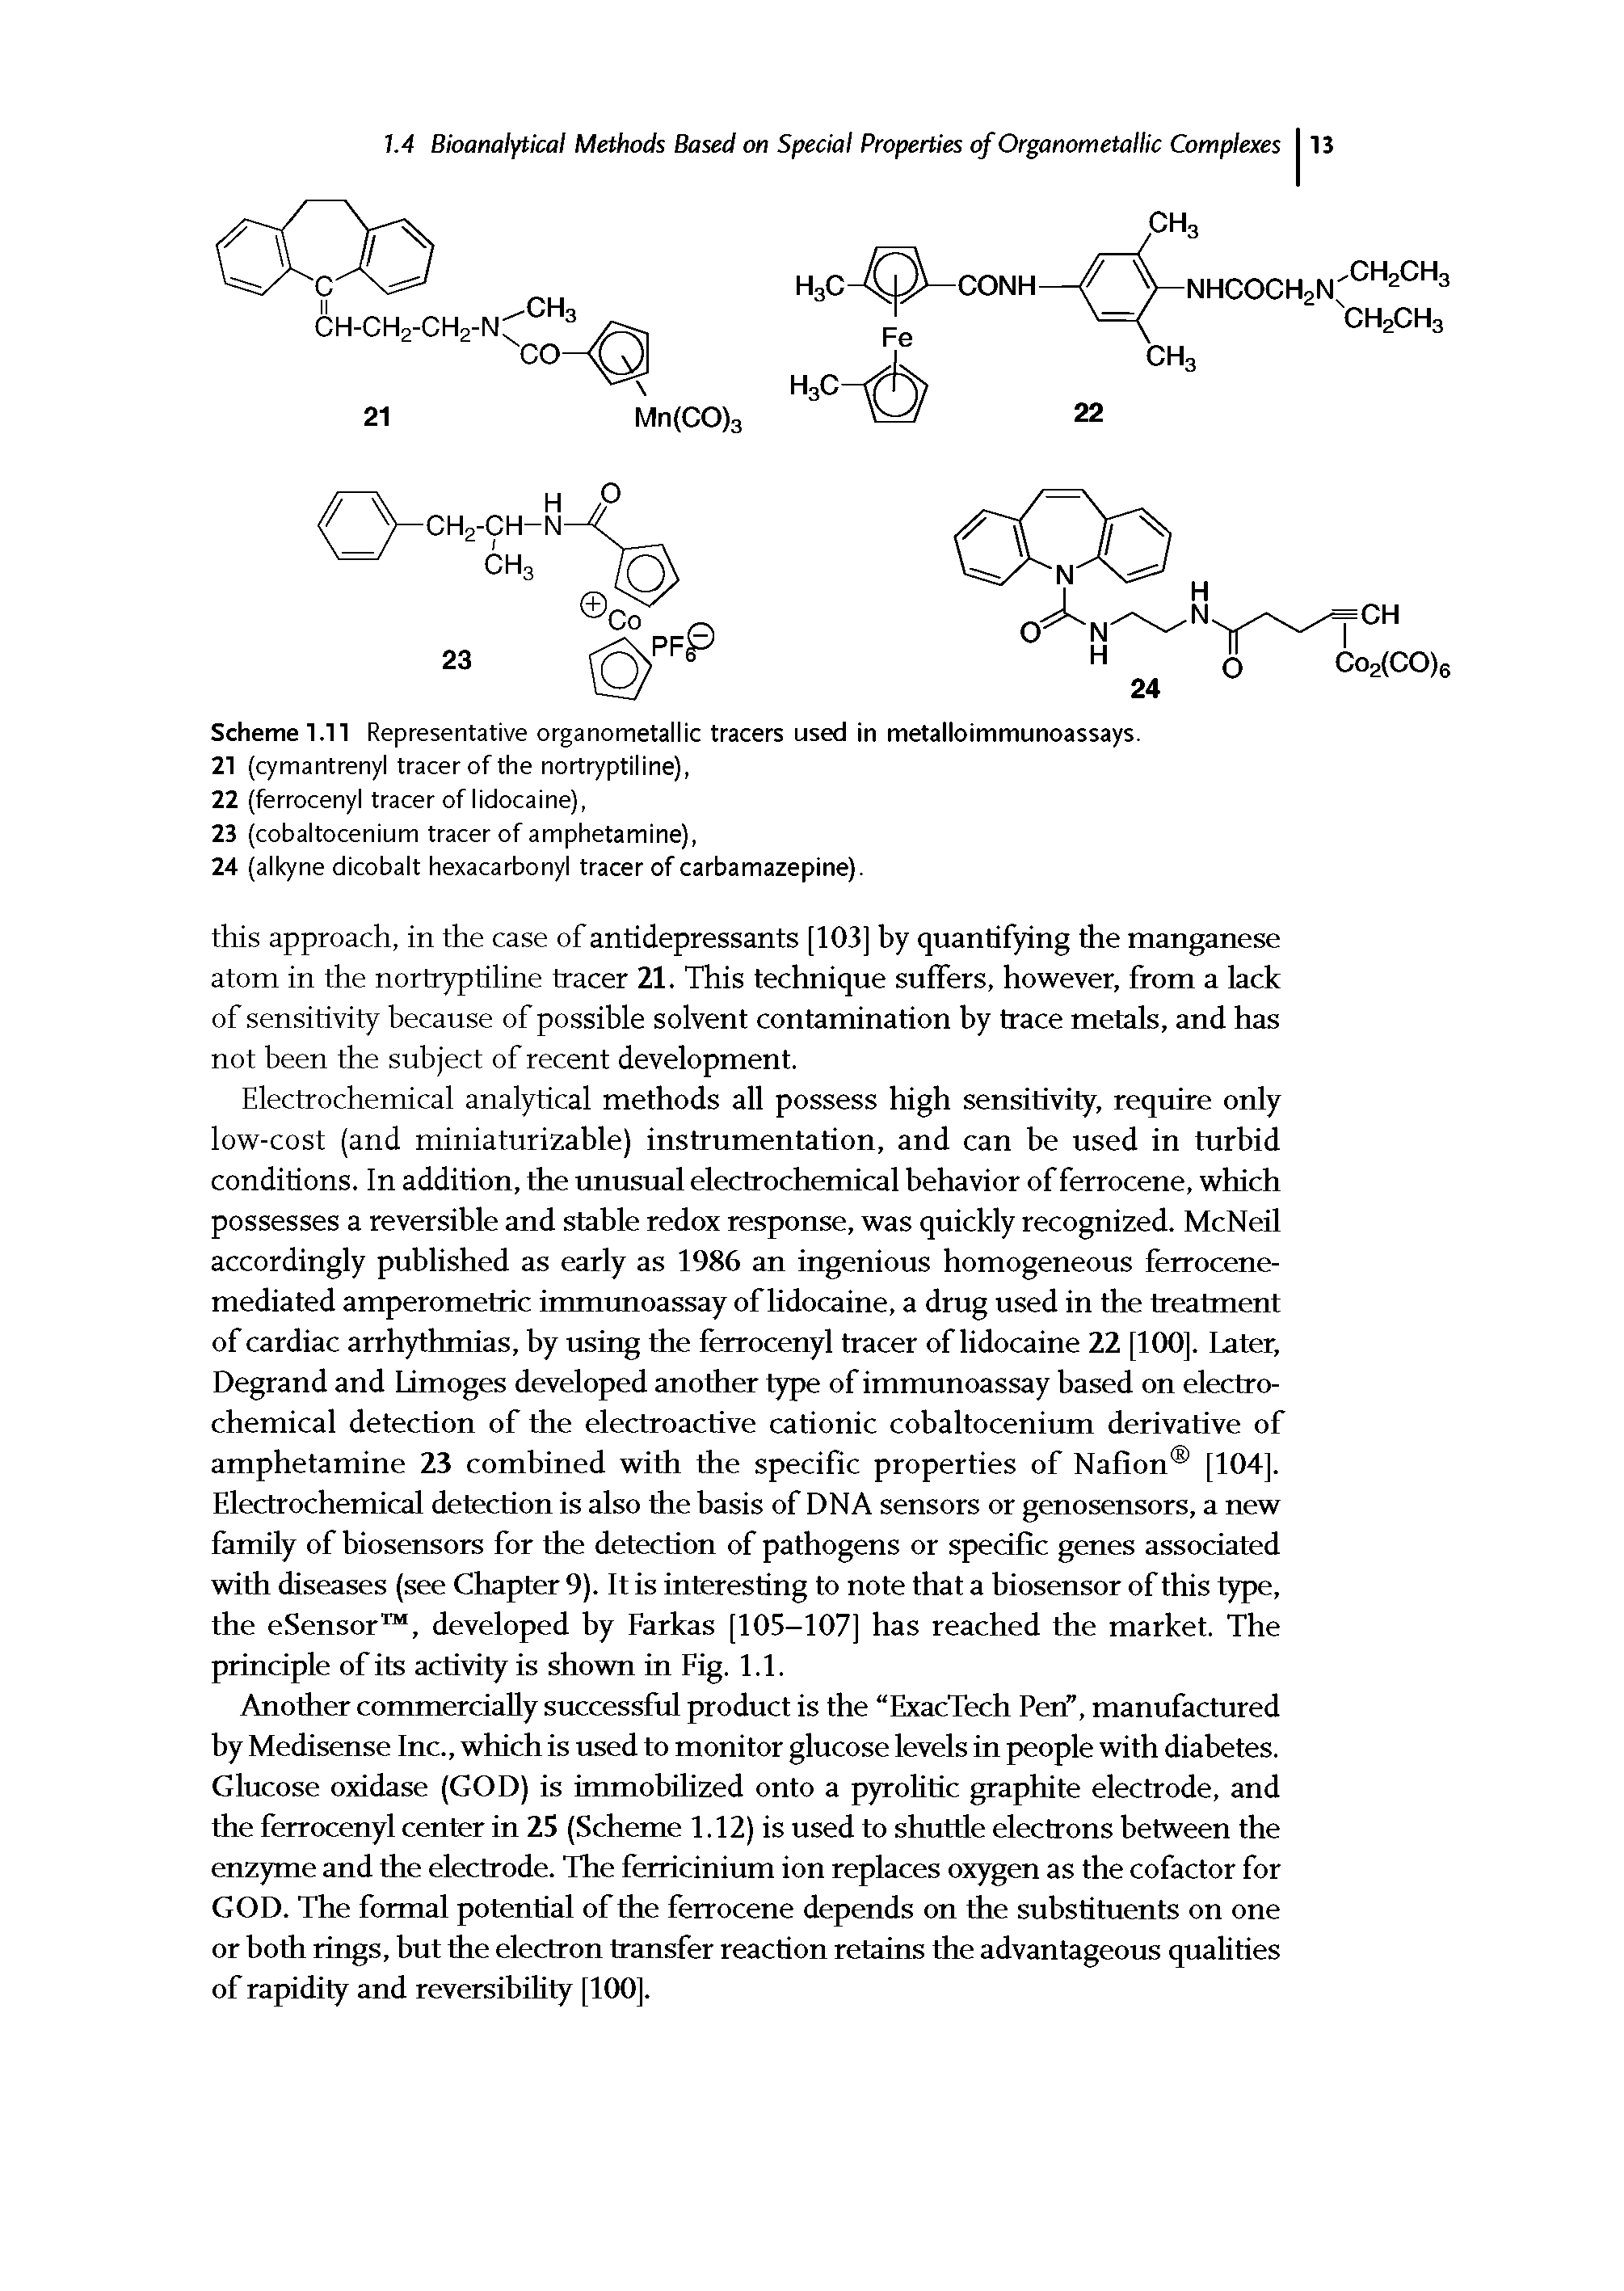 Scheme 1.11 Representative organometallic tracers used in metalloimmunoassays.